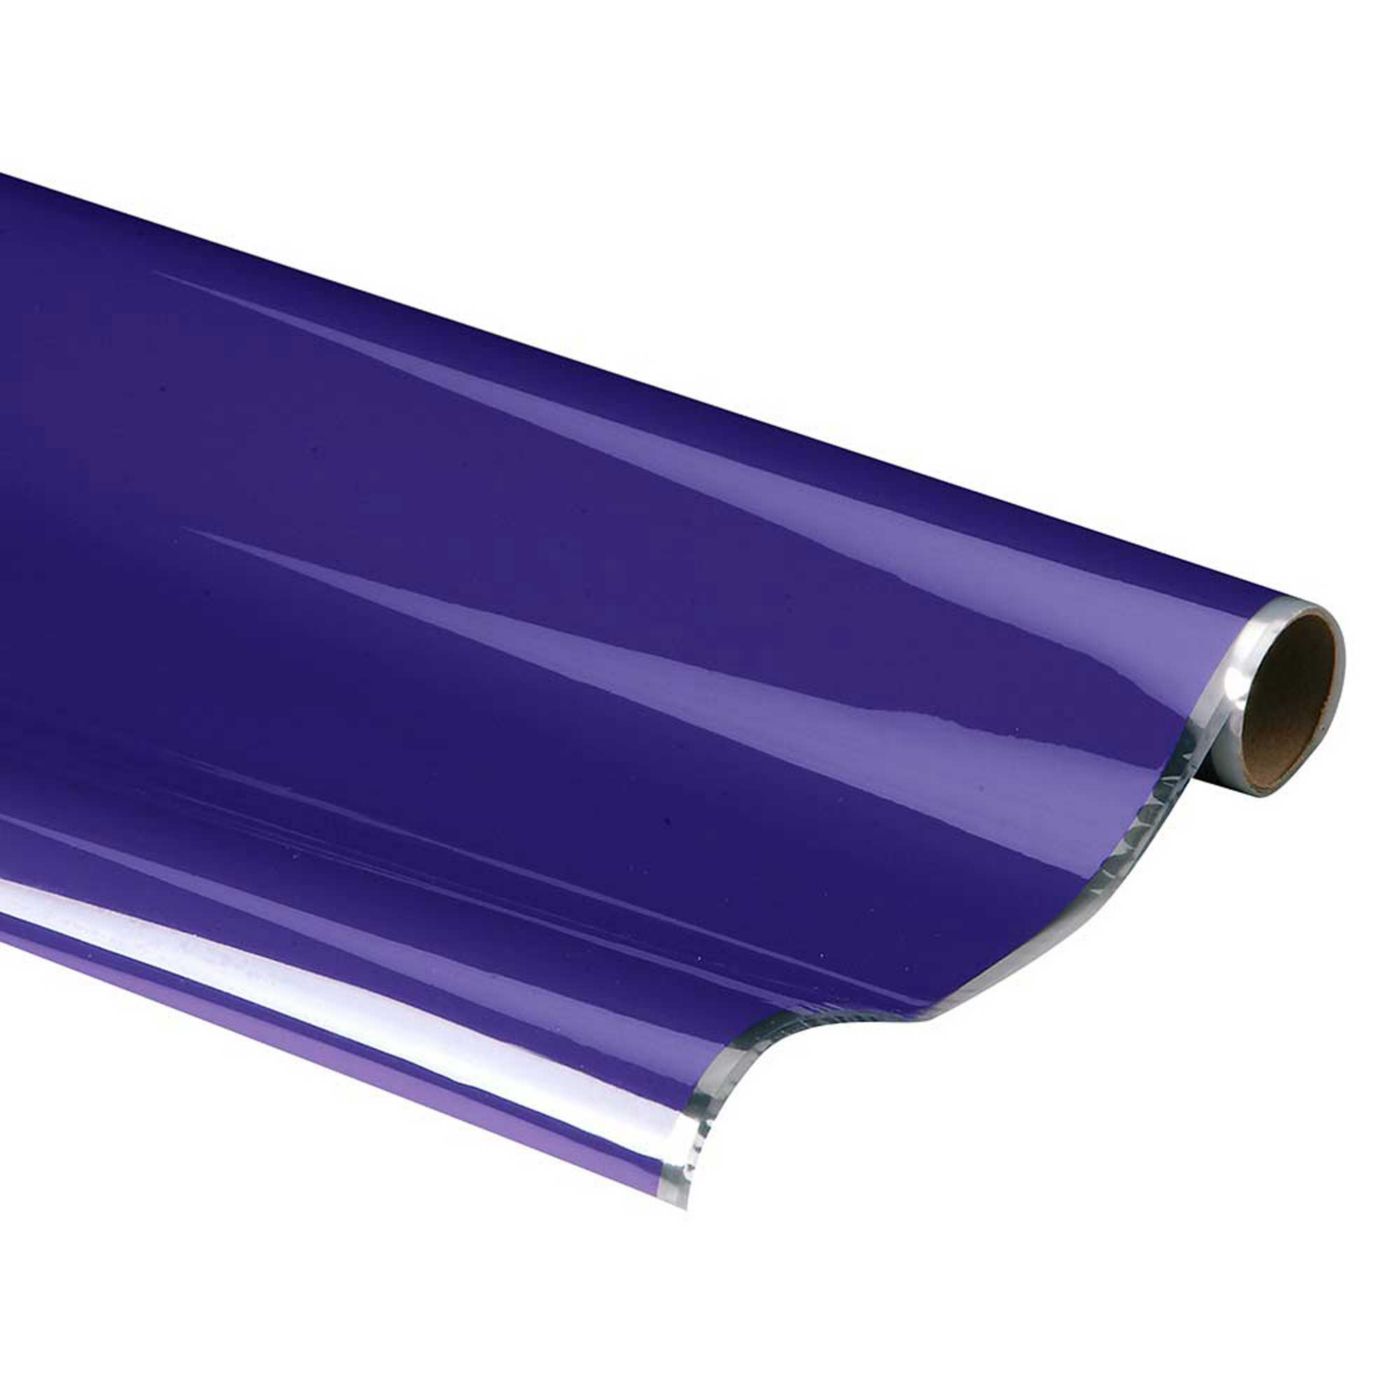 Monokote Opaque Medium Purple 6 ft